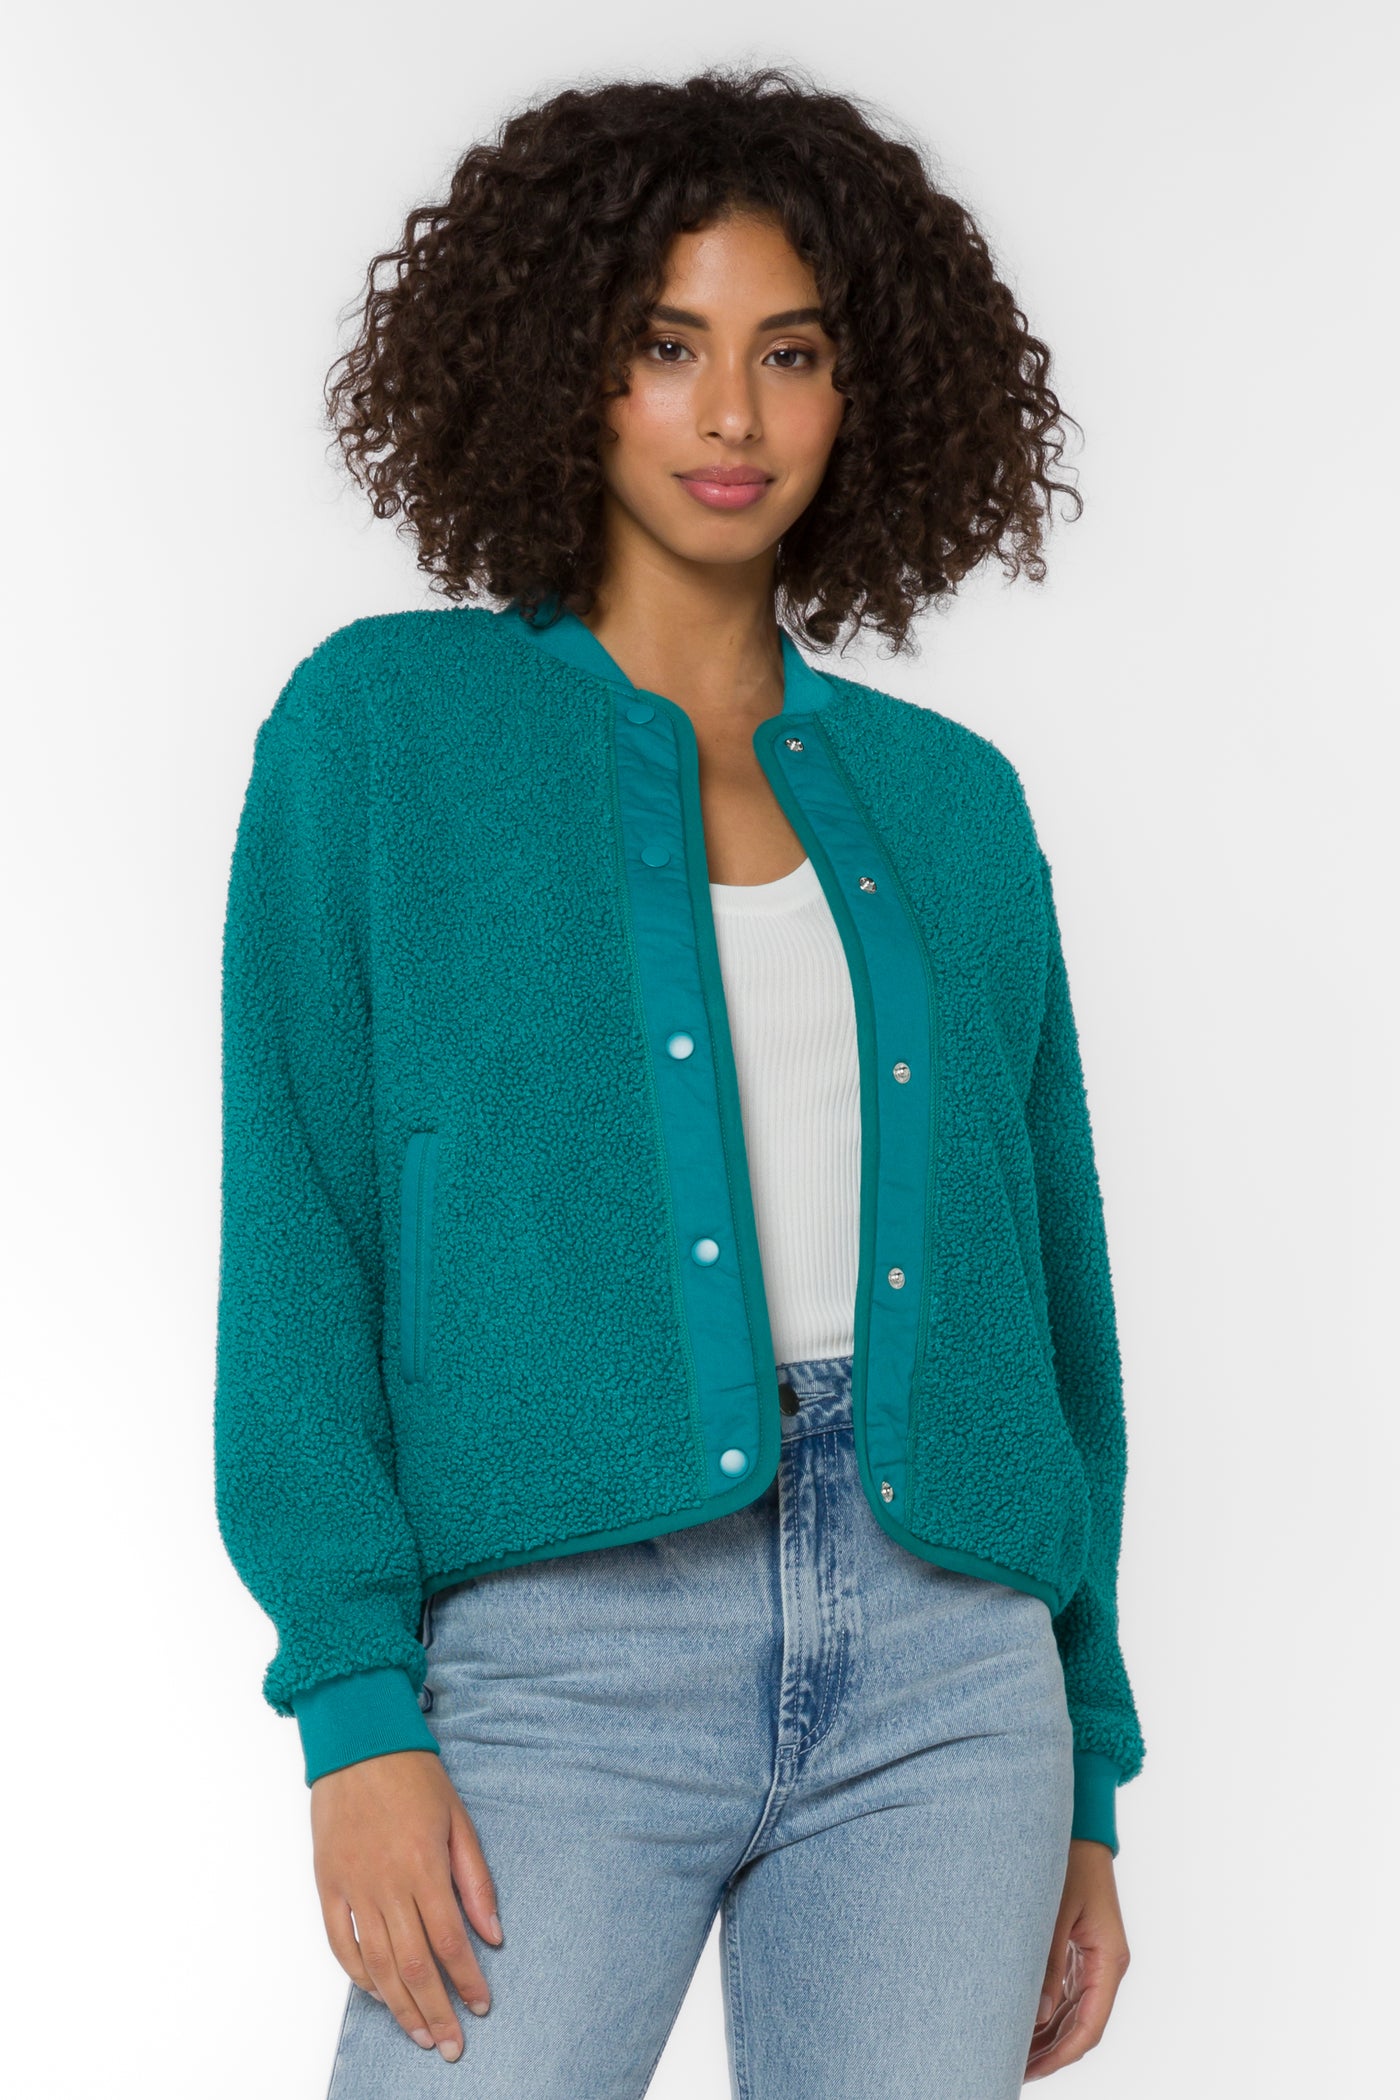 Saint Peacock Blue Jacket - Jackets & Outerwear - Velvet Heart Clothing